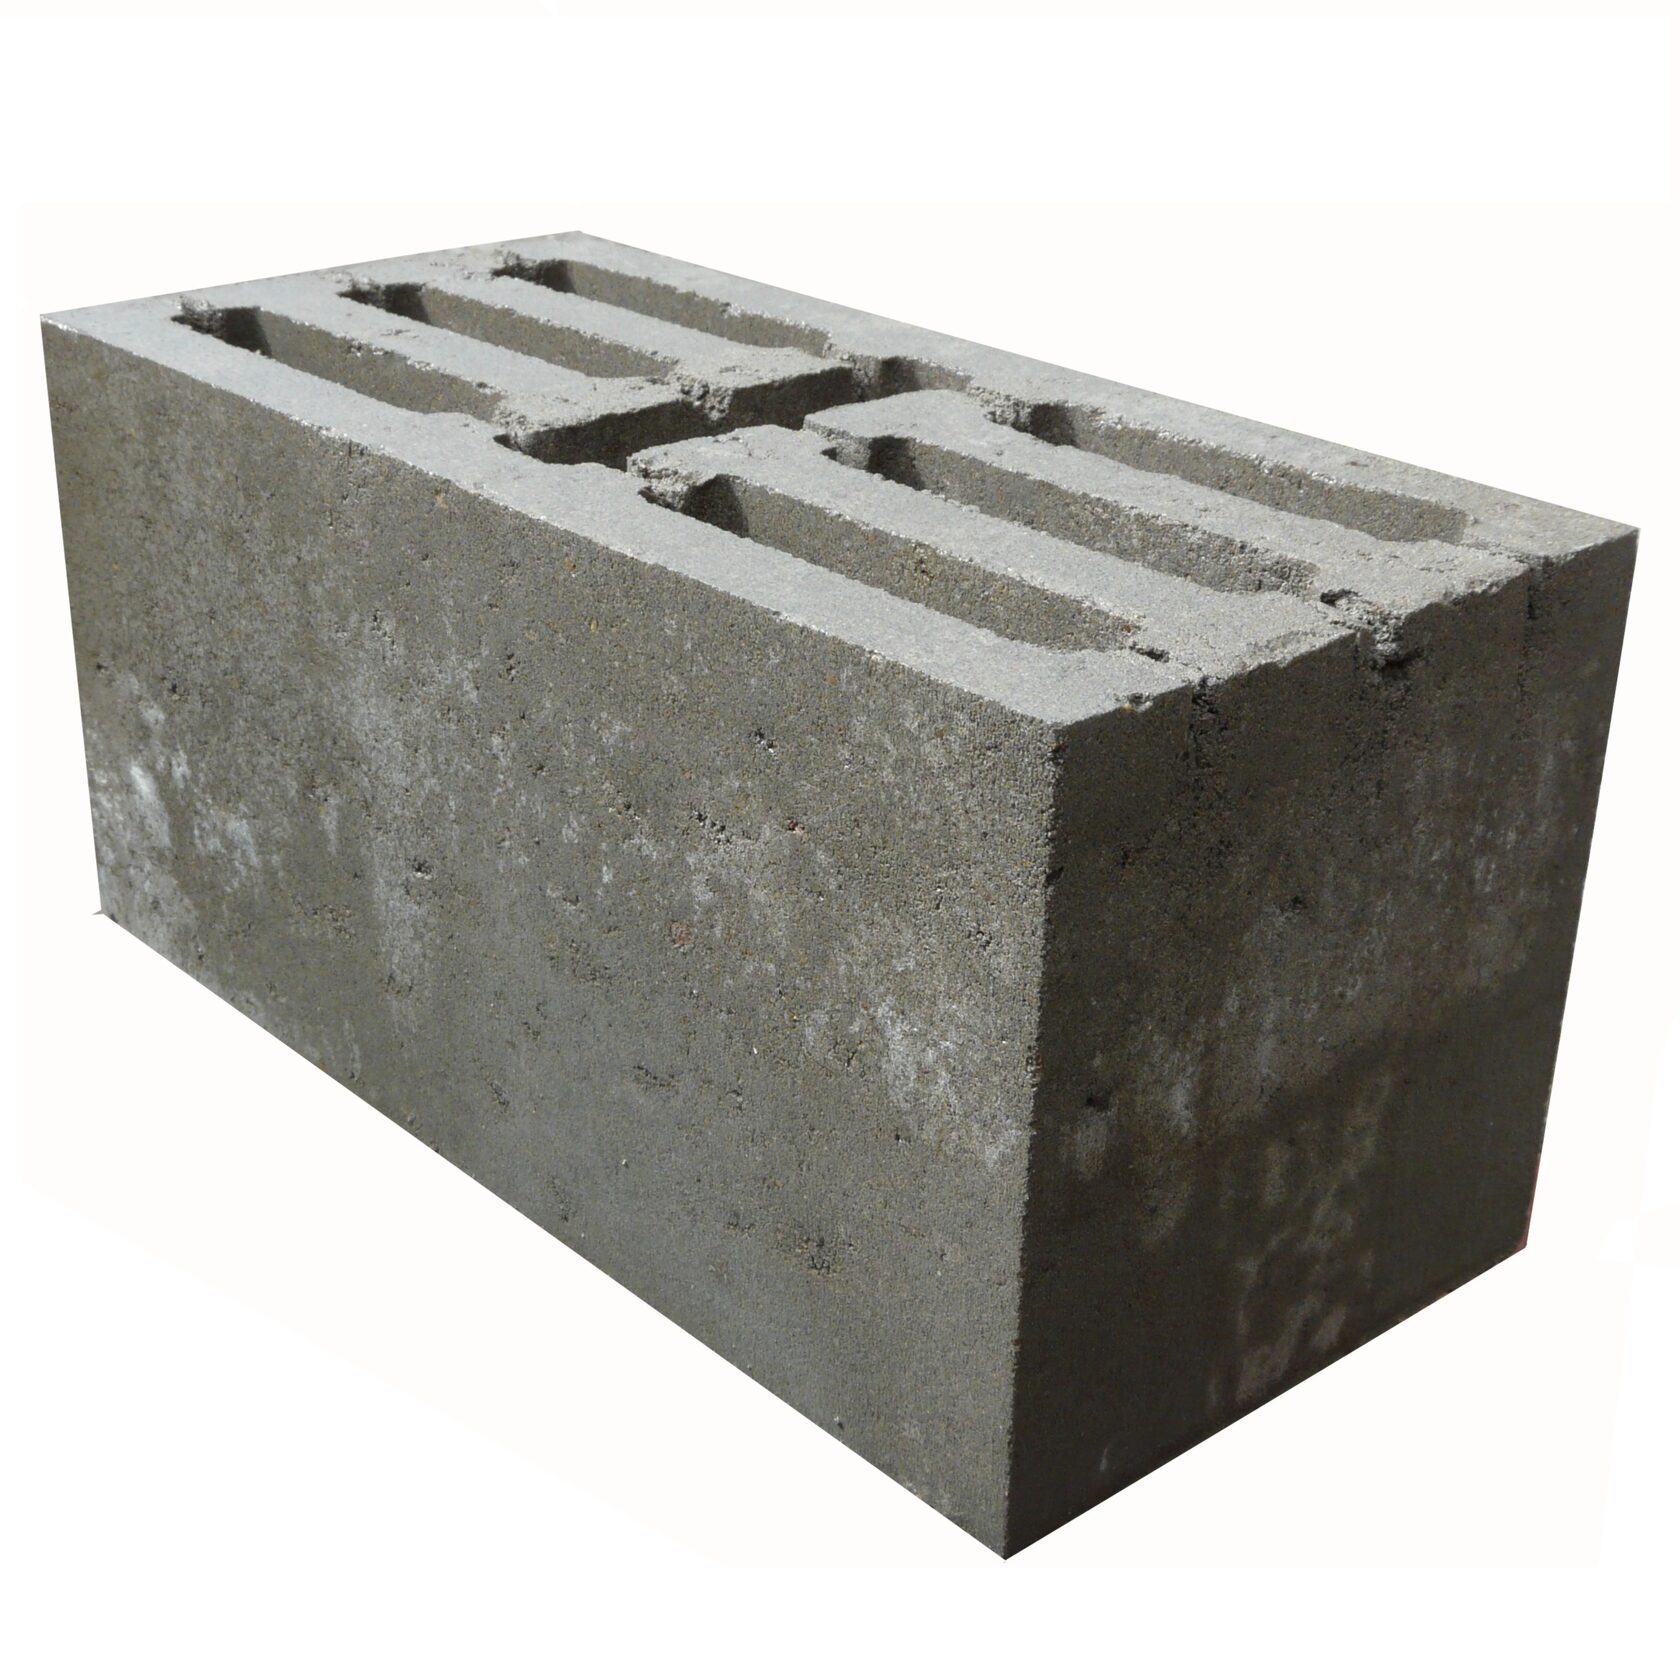 Stone блок. Блок керамзитобетонный 4-х щелевой 390х190х188 мм. Блок пескобетонный 20х20х40см. Бетонный блок 390х190х190. Керамзитобетонный стеновой блок 4-х щелевой (190 мм).